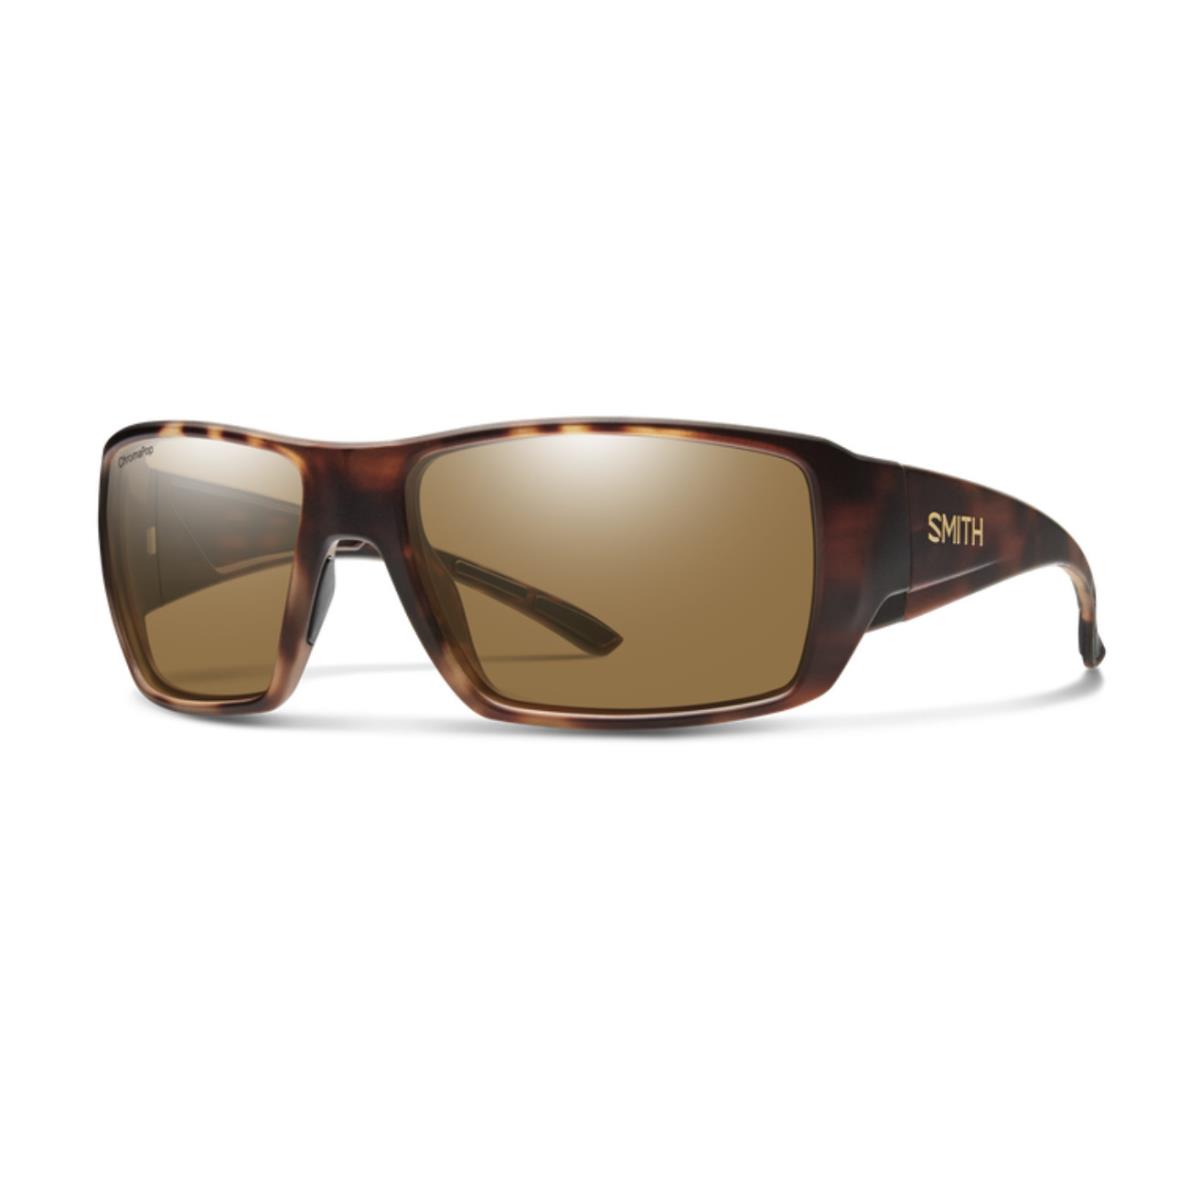 Smith Optics Guides Choice XL Polarized Sunglasses Matte Havana/Brown Lens